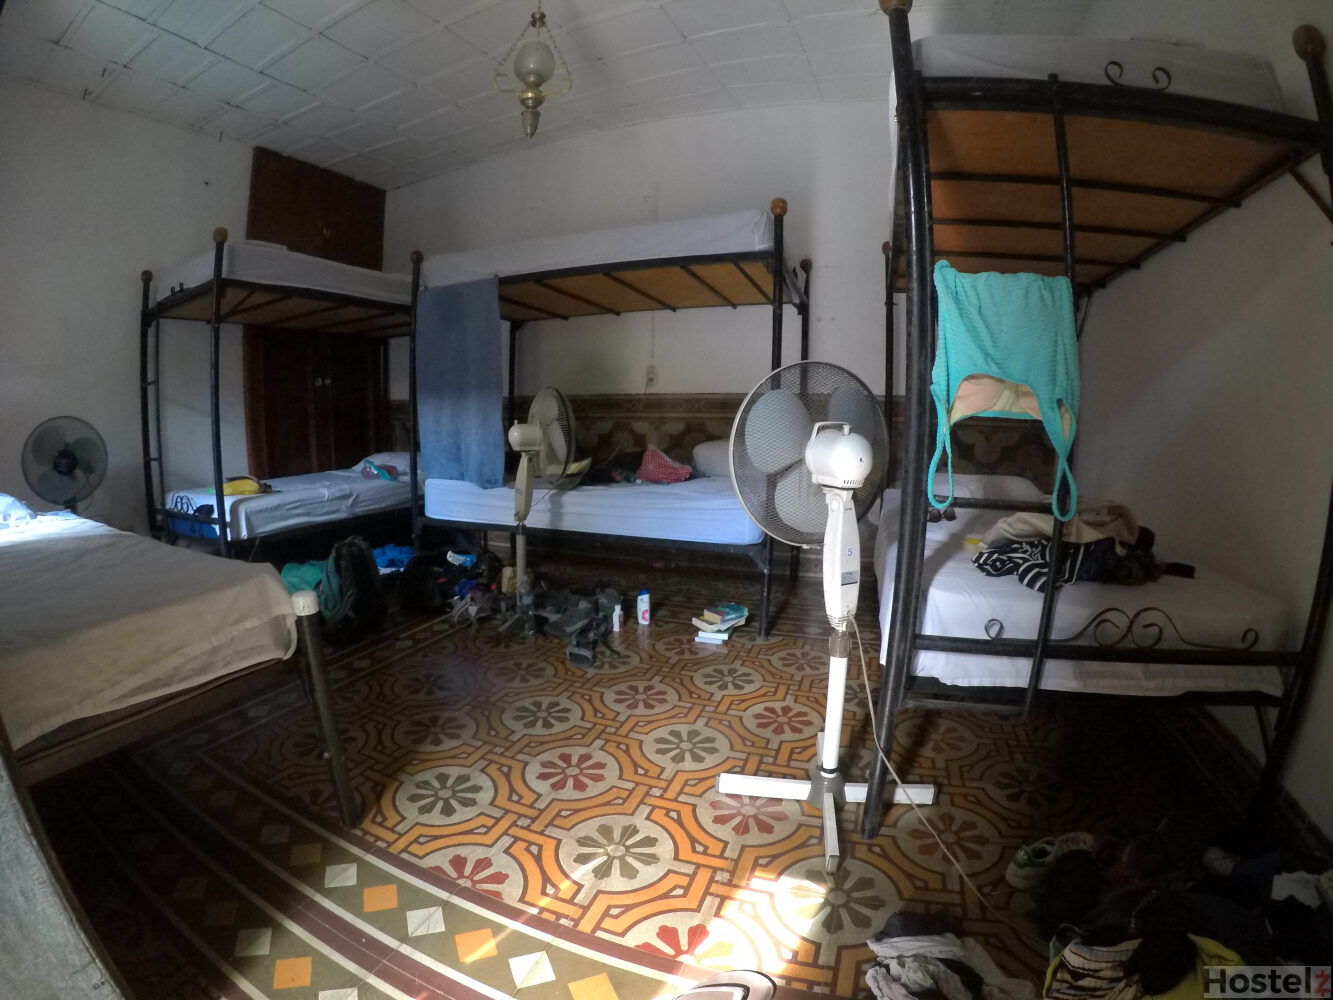 7-bed dorm with en suite bathroom